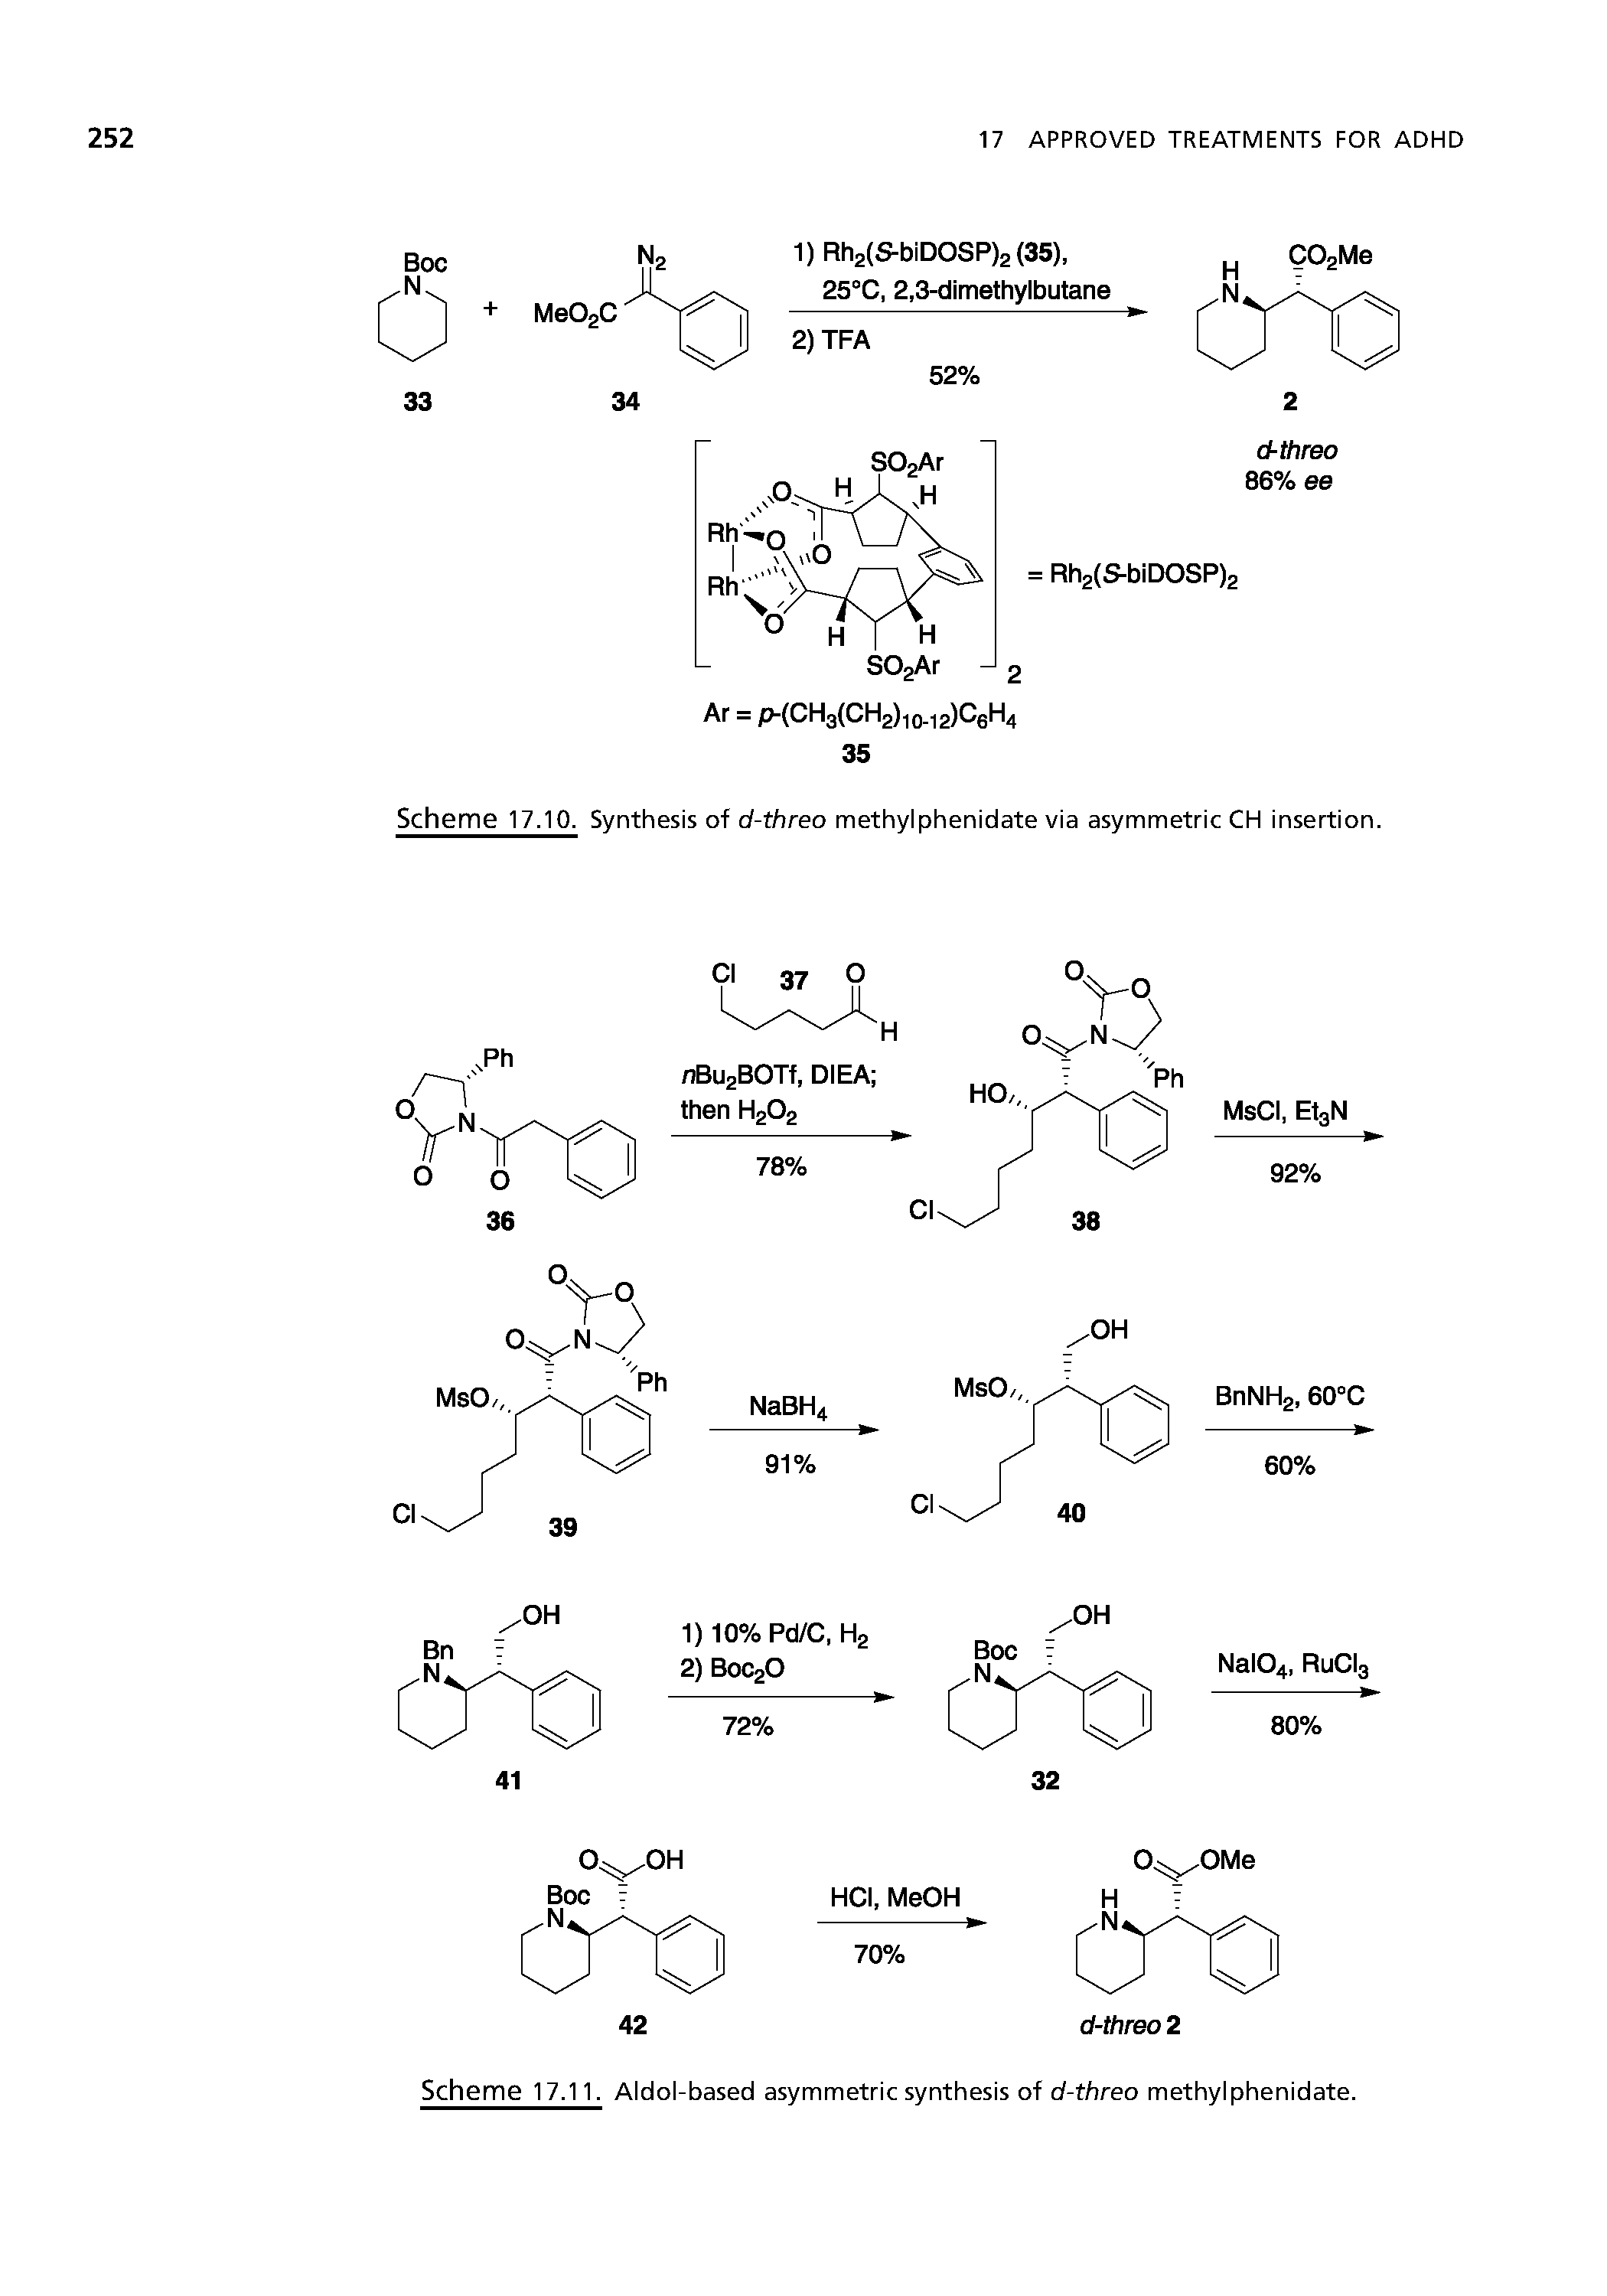 Scheme 17.11. Aldol-based asymmetric synthesis of d-threo methyl phenidate.